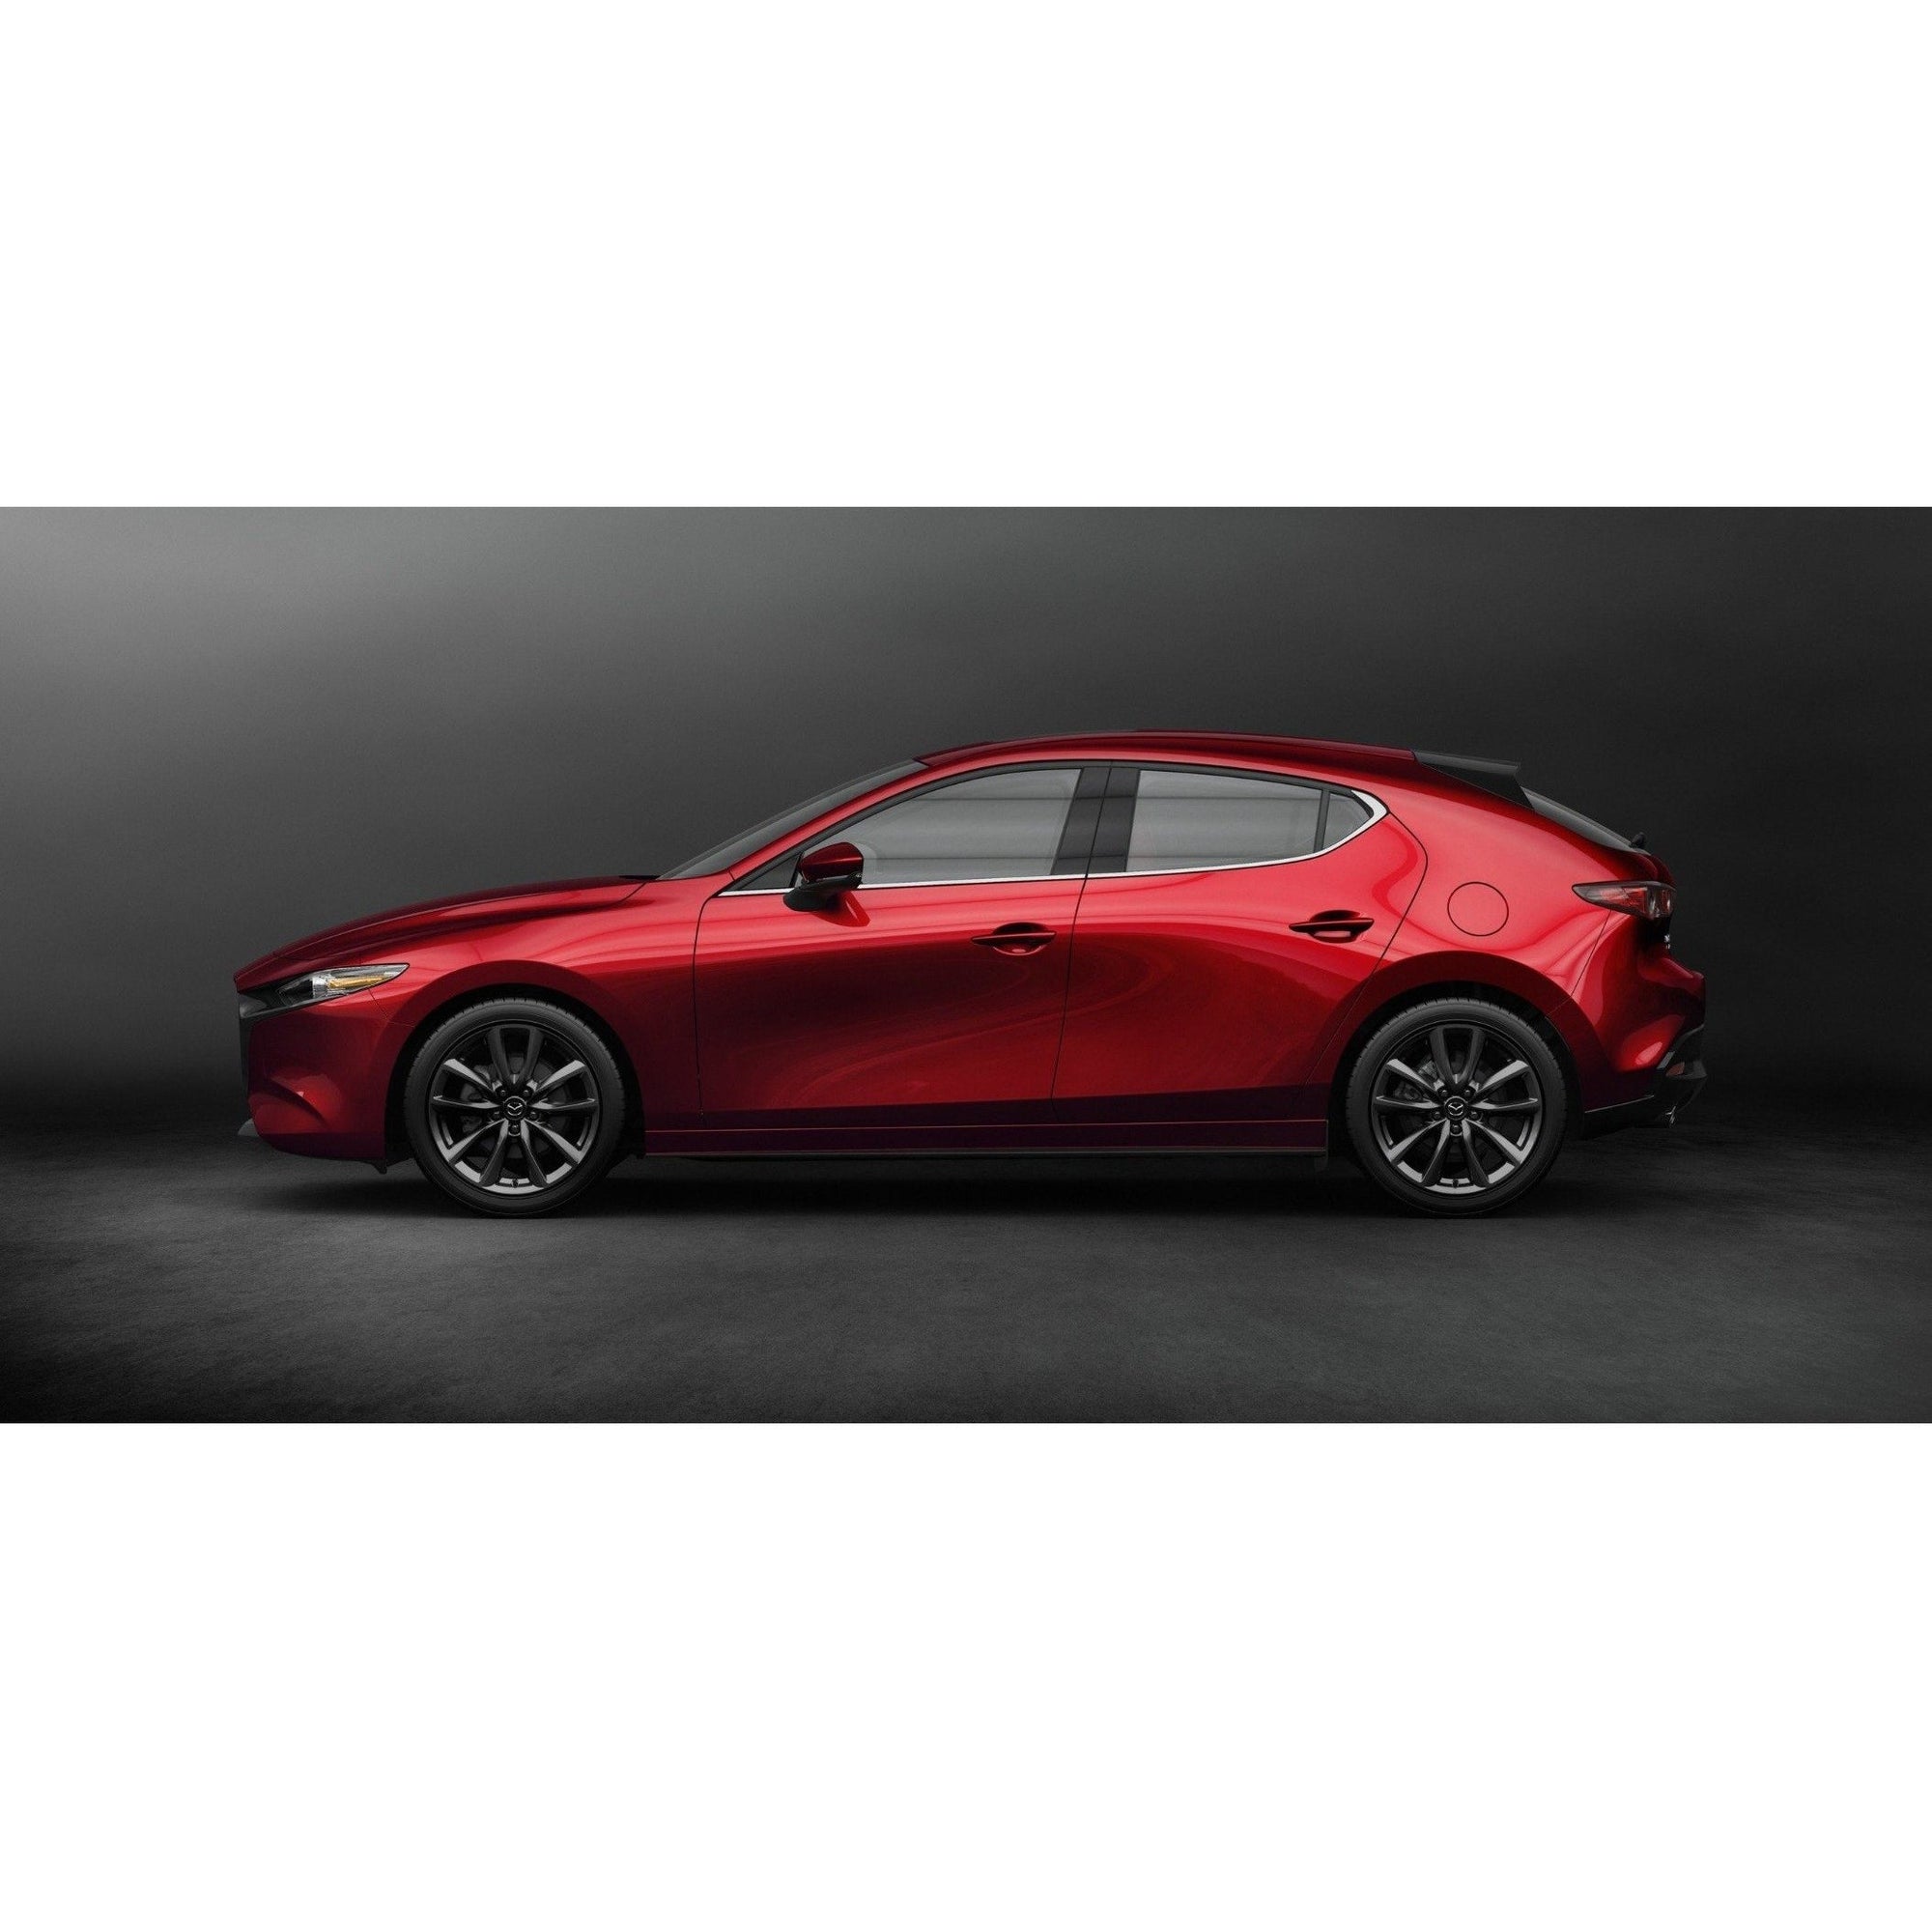 Mazda3 OEM Alloy Wheel - Dark Grey High-Lustre Metallic - 18" | Mazda3 Hatchback (2019-2022)